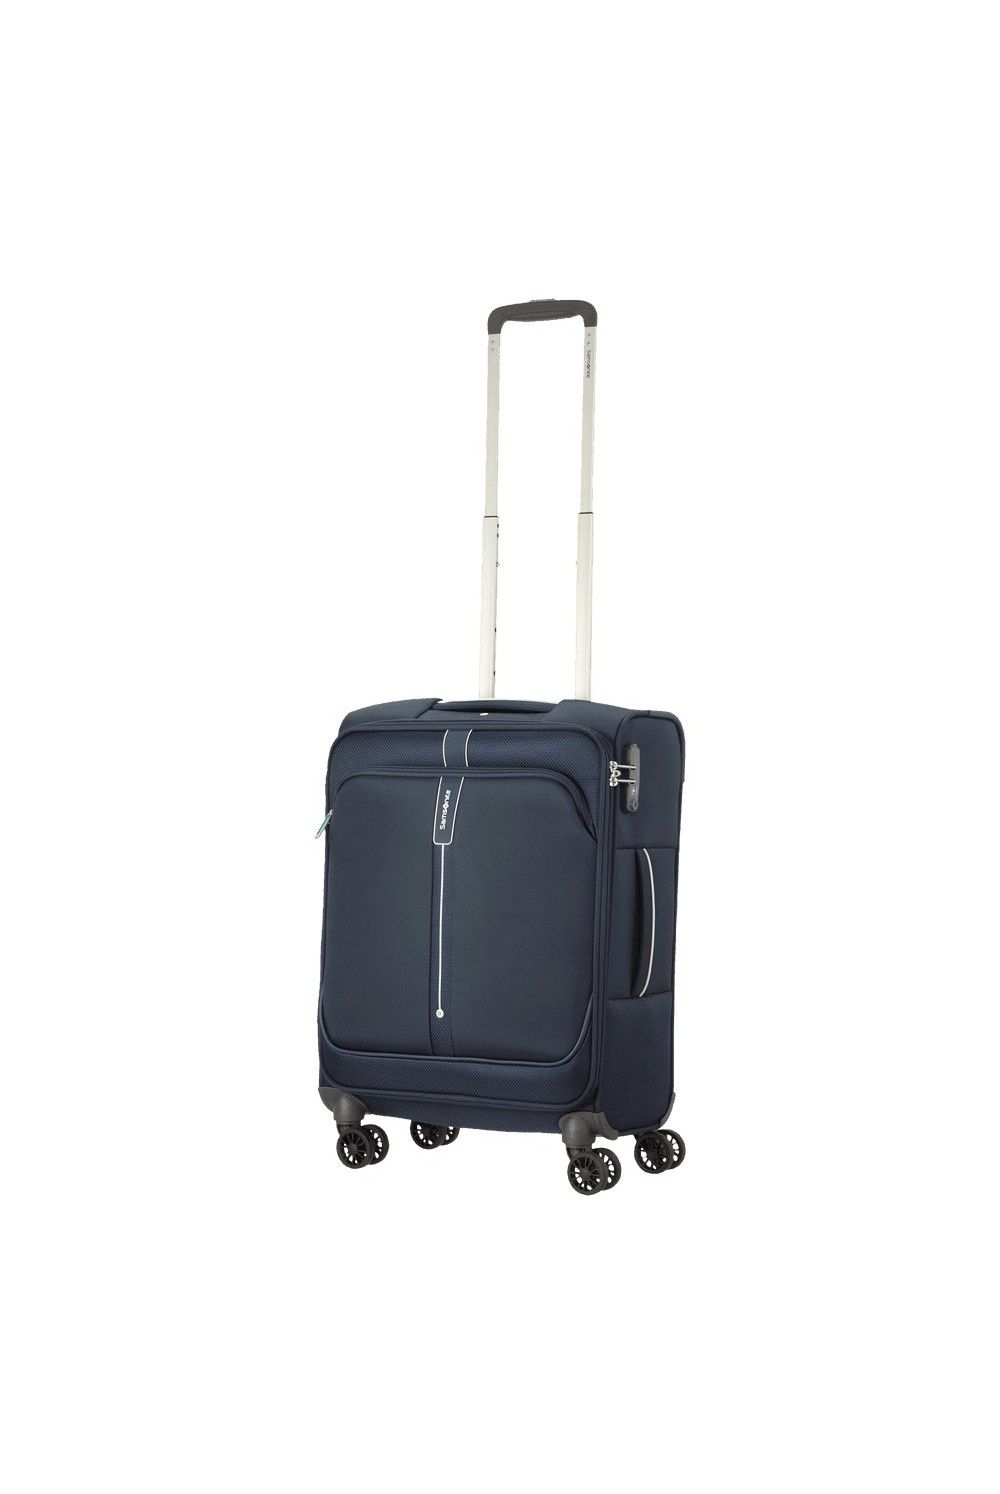 Samsonite suitcase hand luggage Popsoda 55 4 wheel 40cm